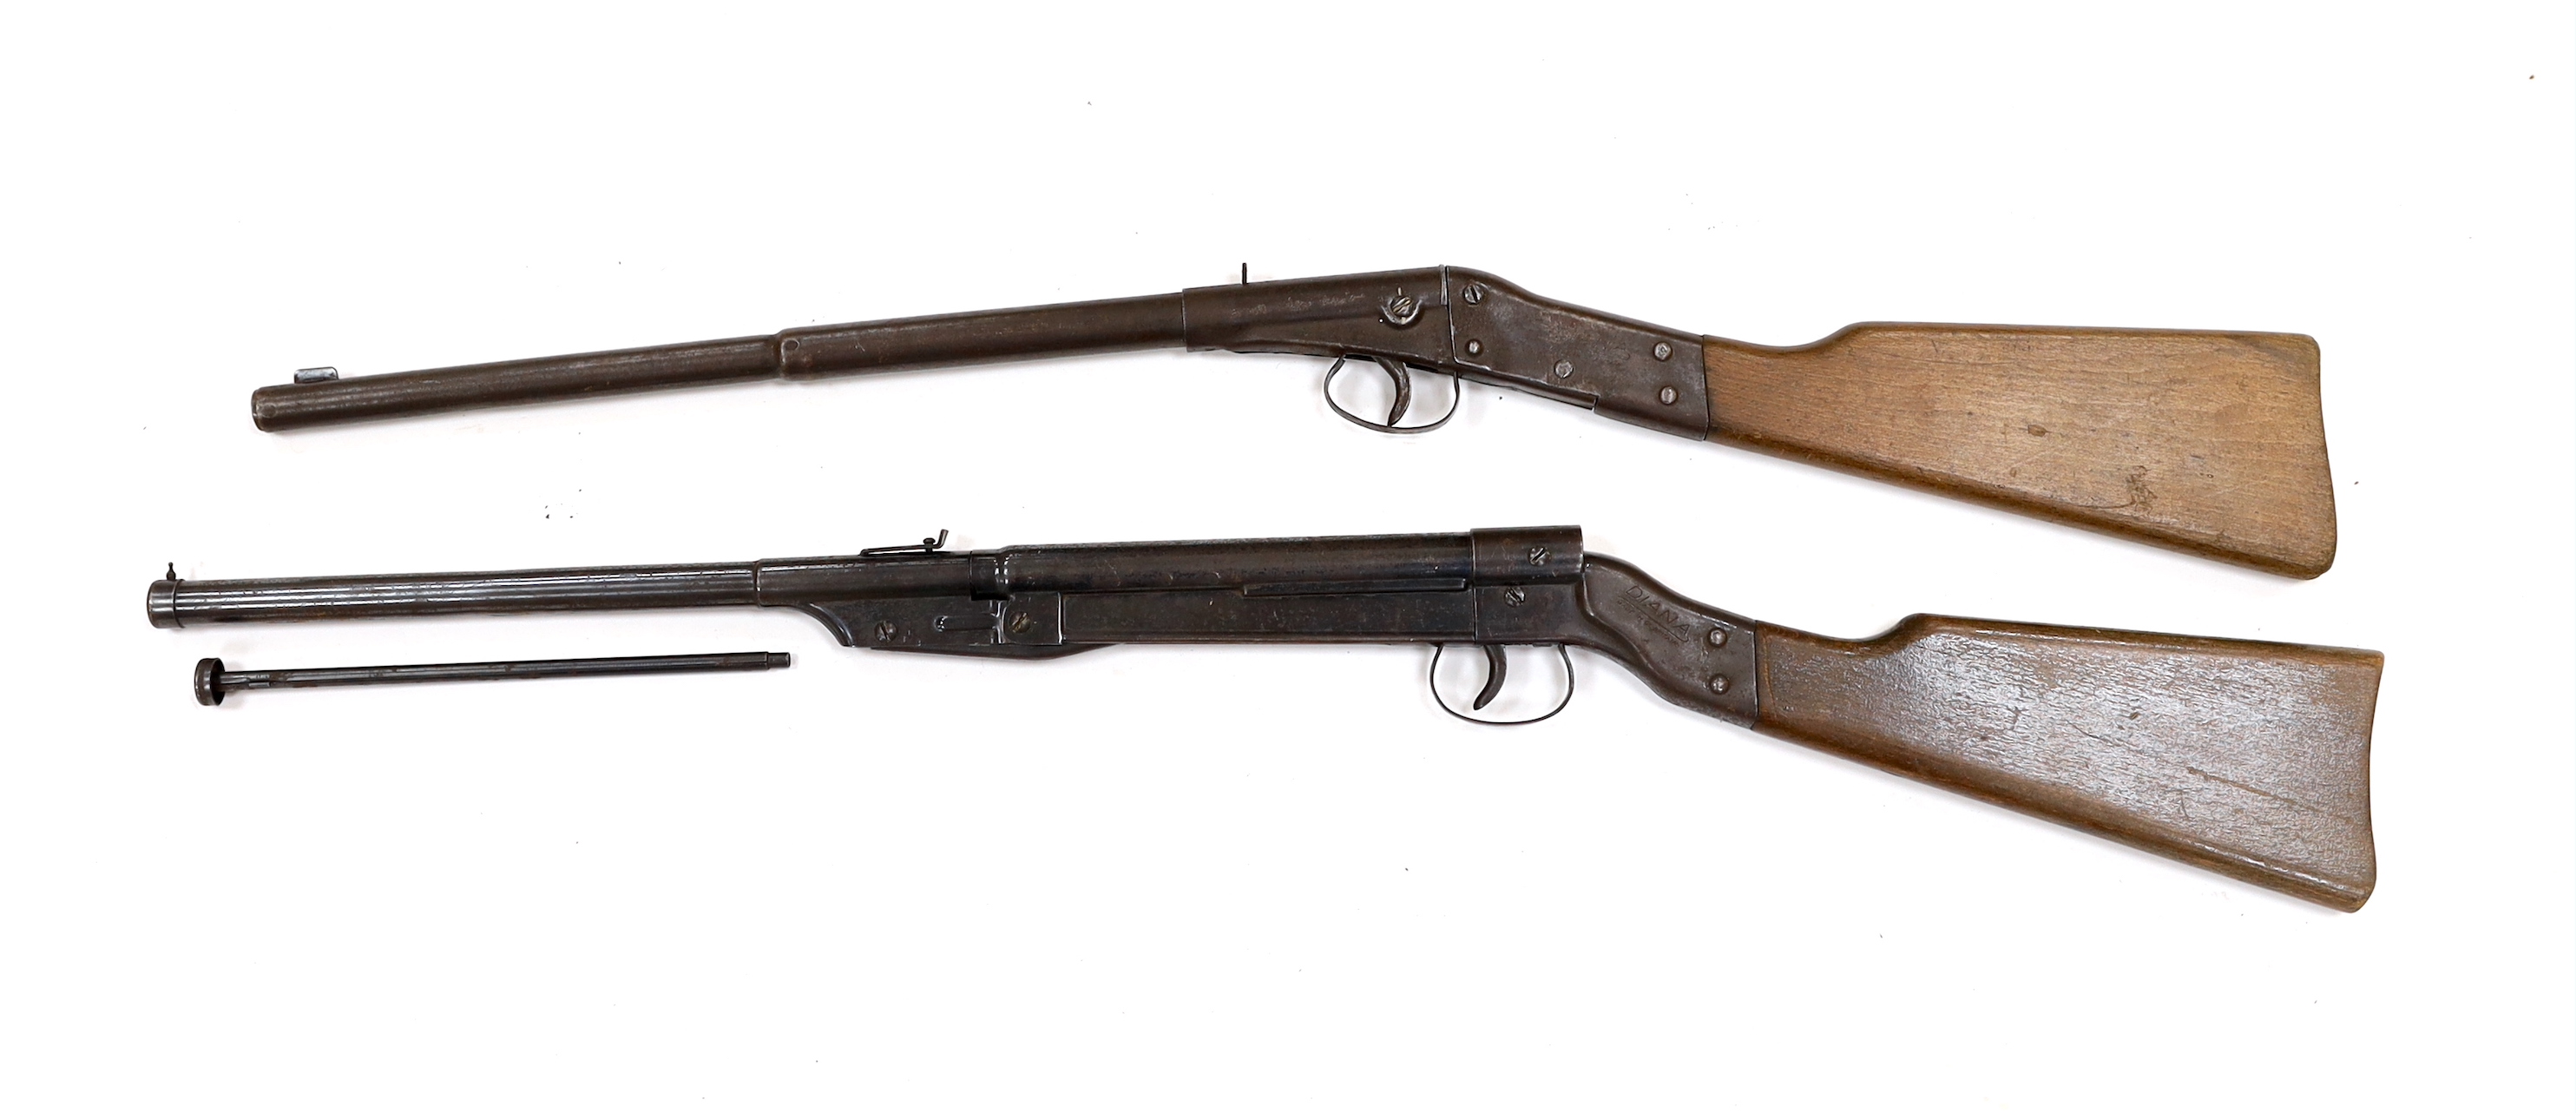 Two Diana 177 break action air rifles